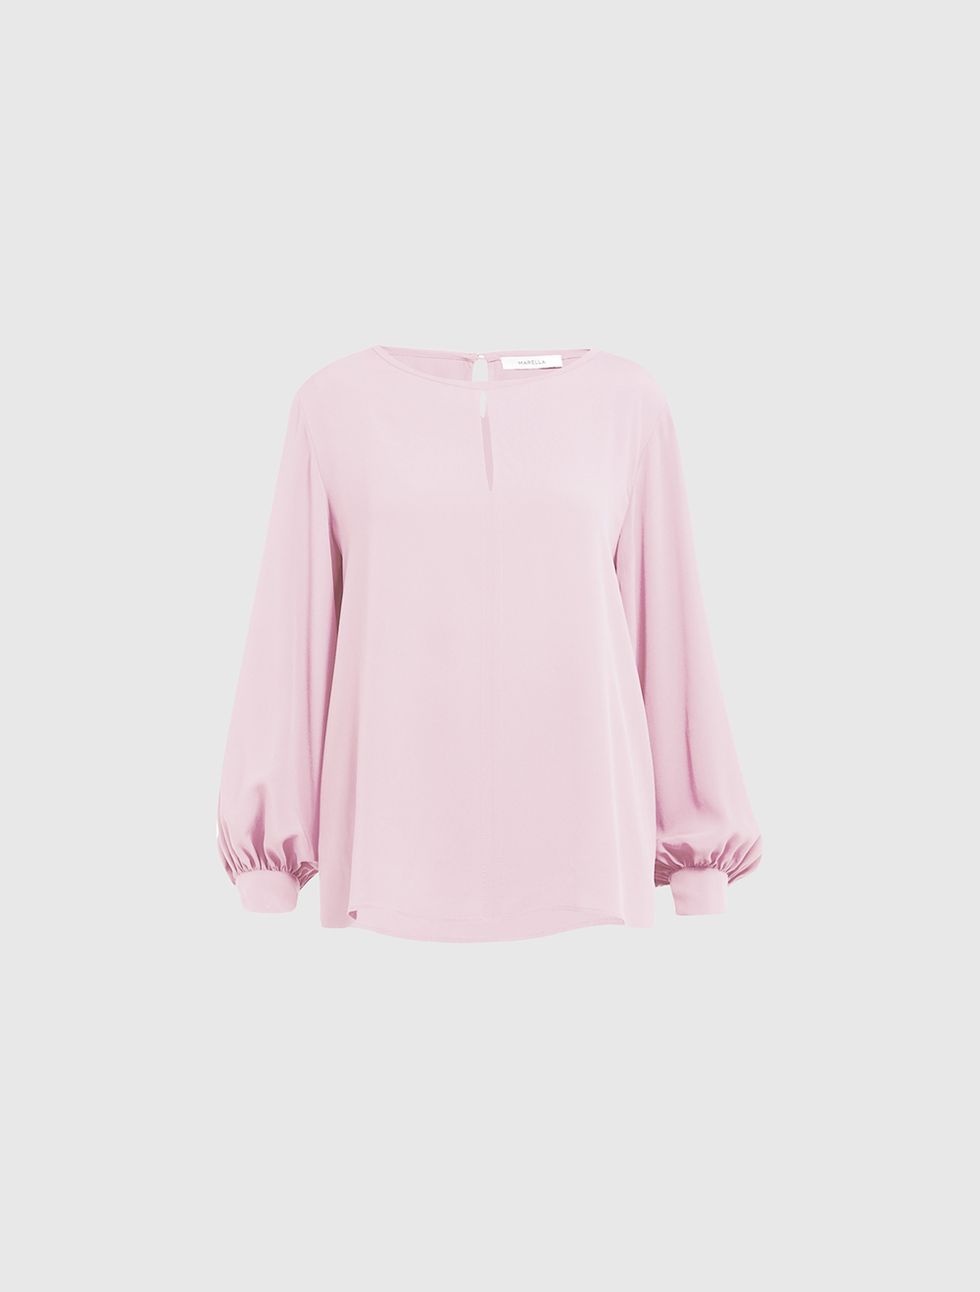 Clothing, Pink, Sleeve, Outerwear, Blouse, Top, Neck, T-shirt, Shirt, Magenta, 